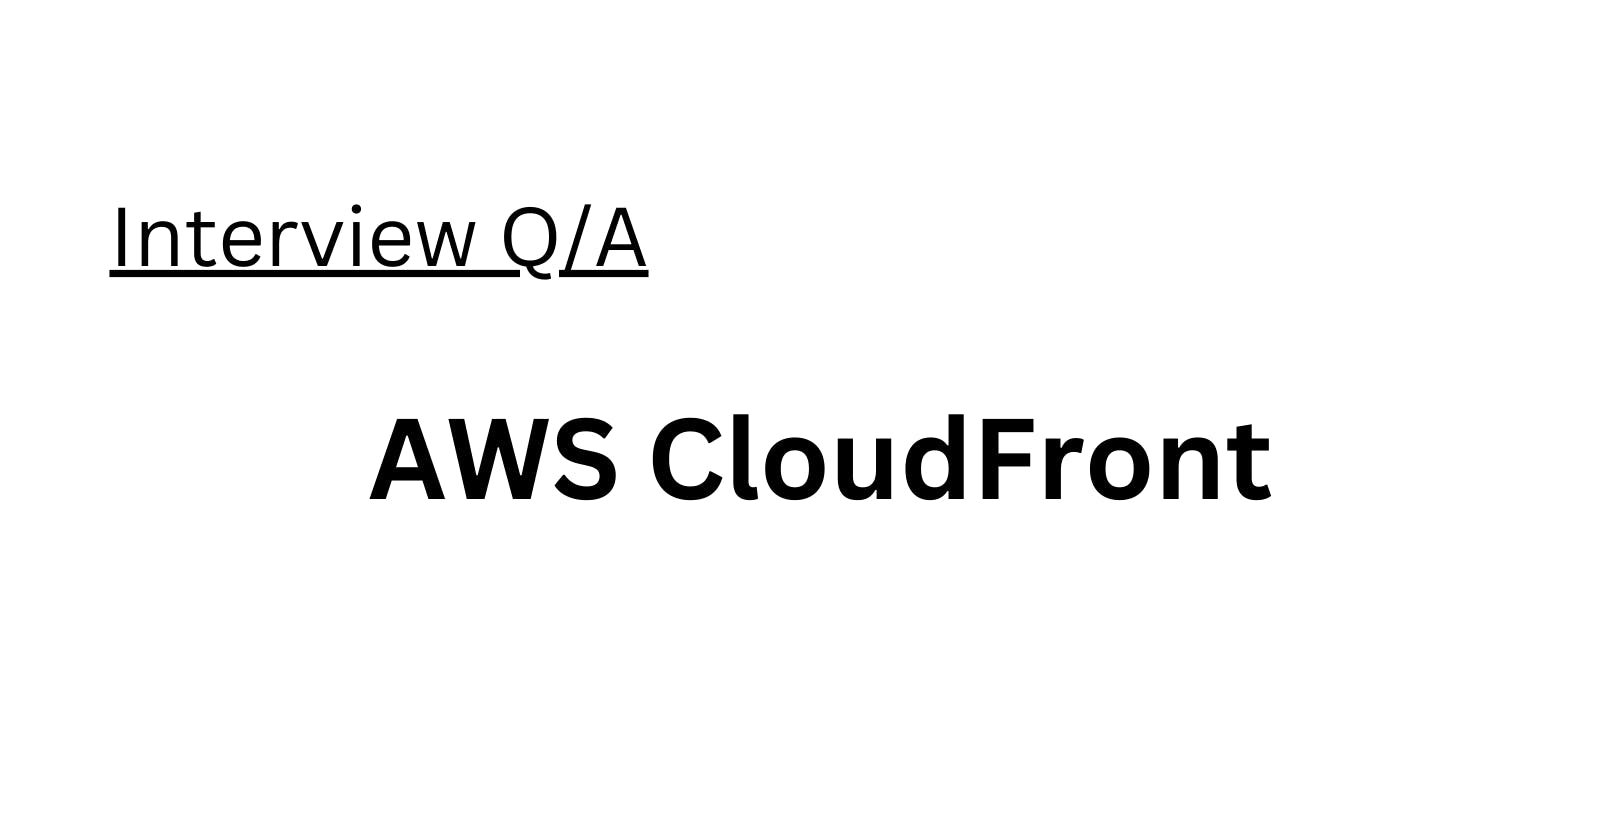 AWS CloudFront Interview Q/A